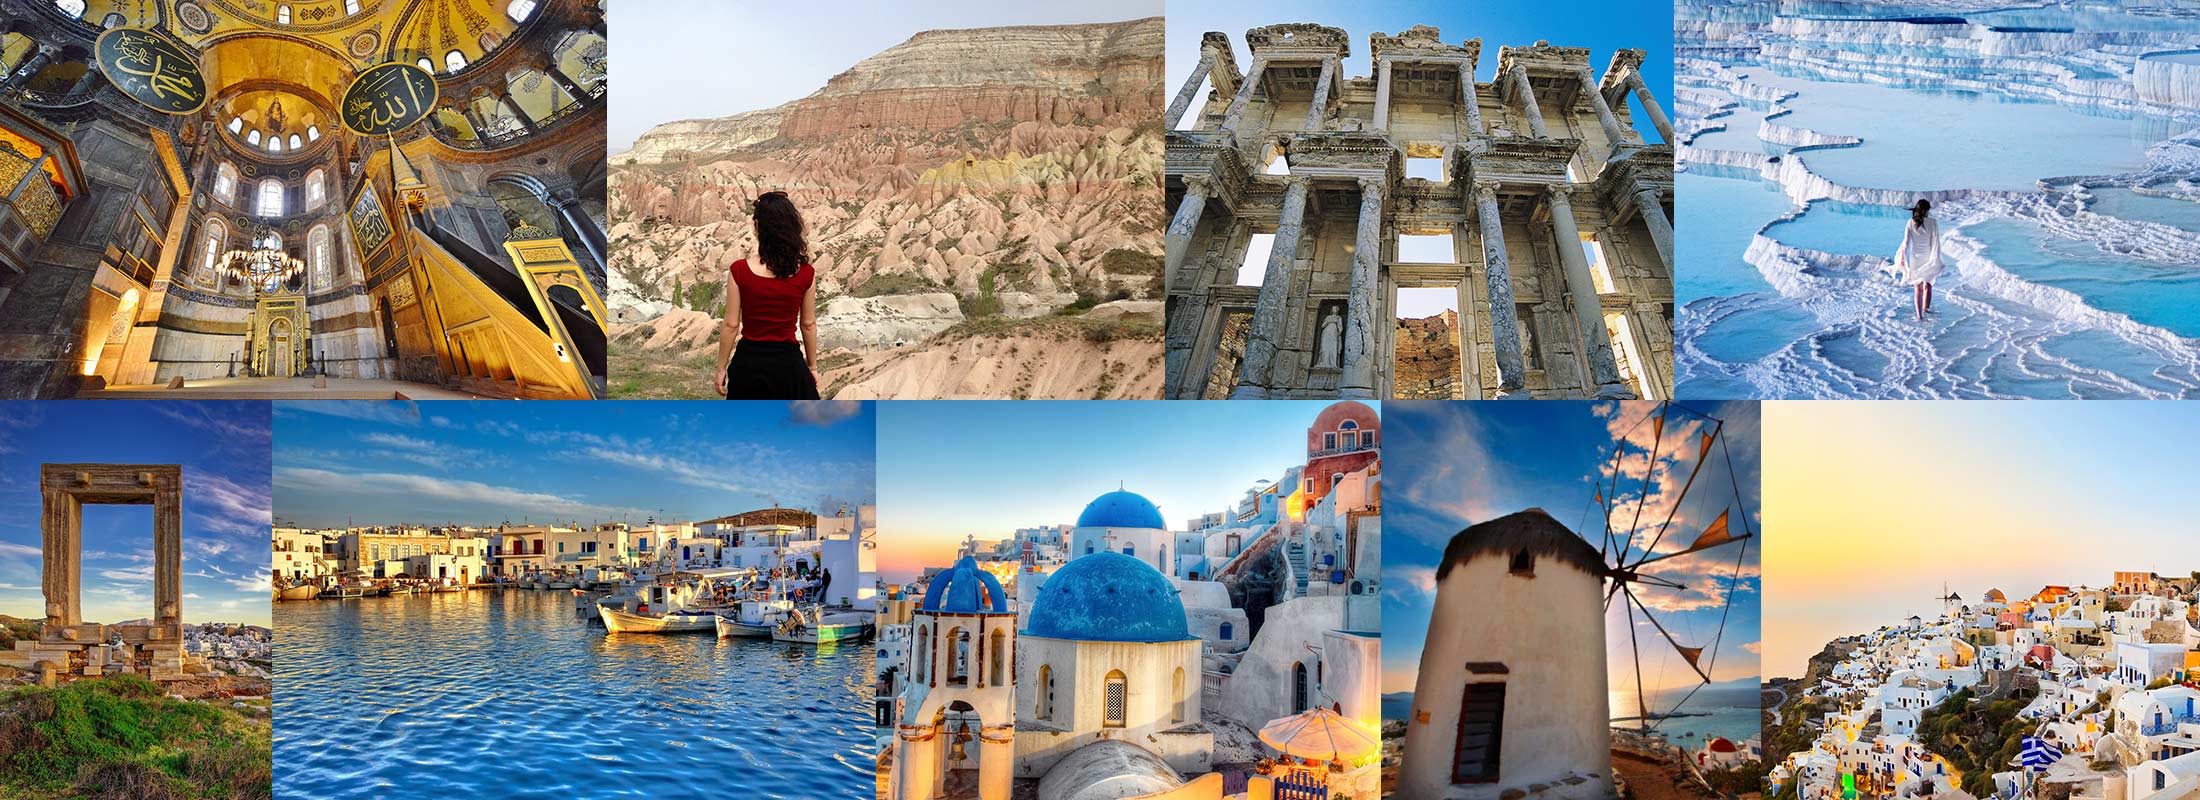 istanbul-cappadocia-ephesus-sirince-pamukkale-hierapolis-athens-mykonos-santorini-naxos-paros-greece-turkey-package-tours